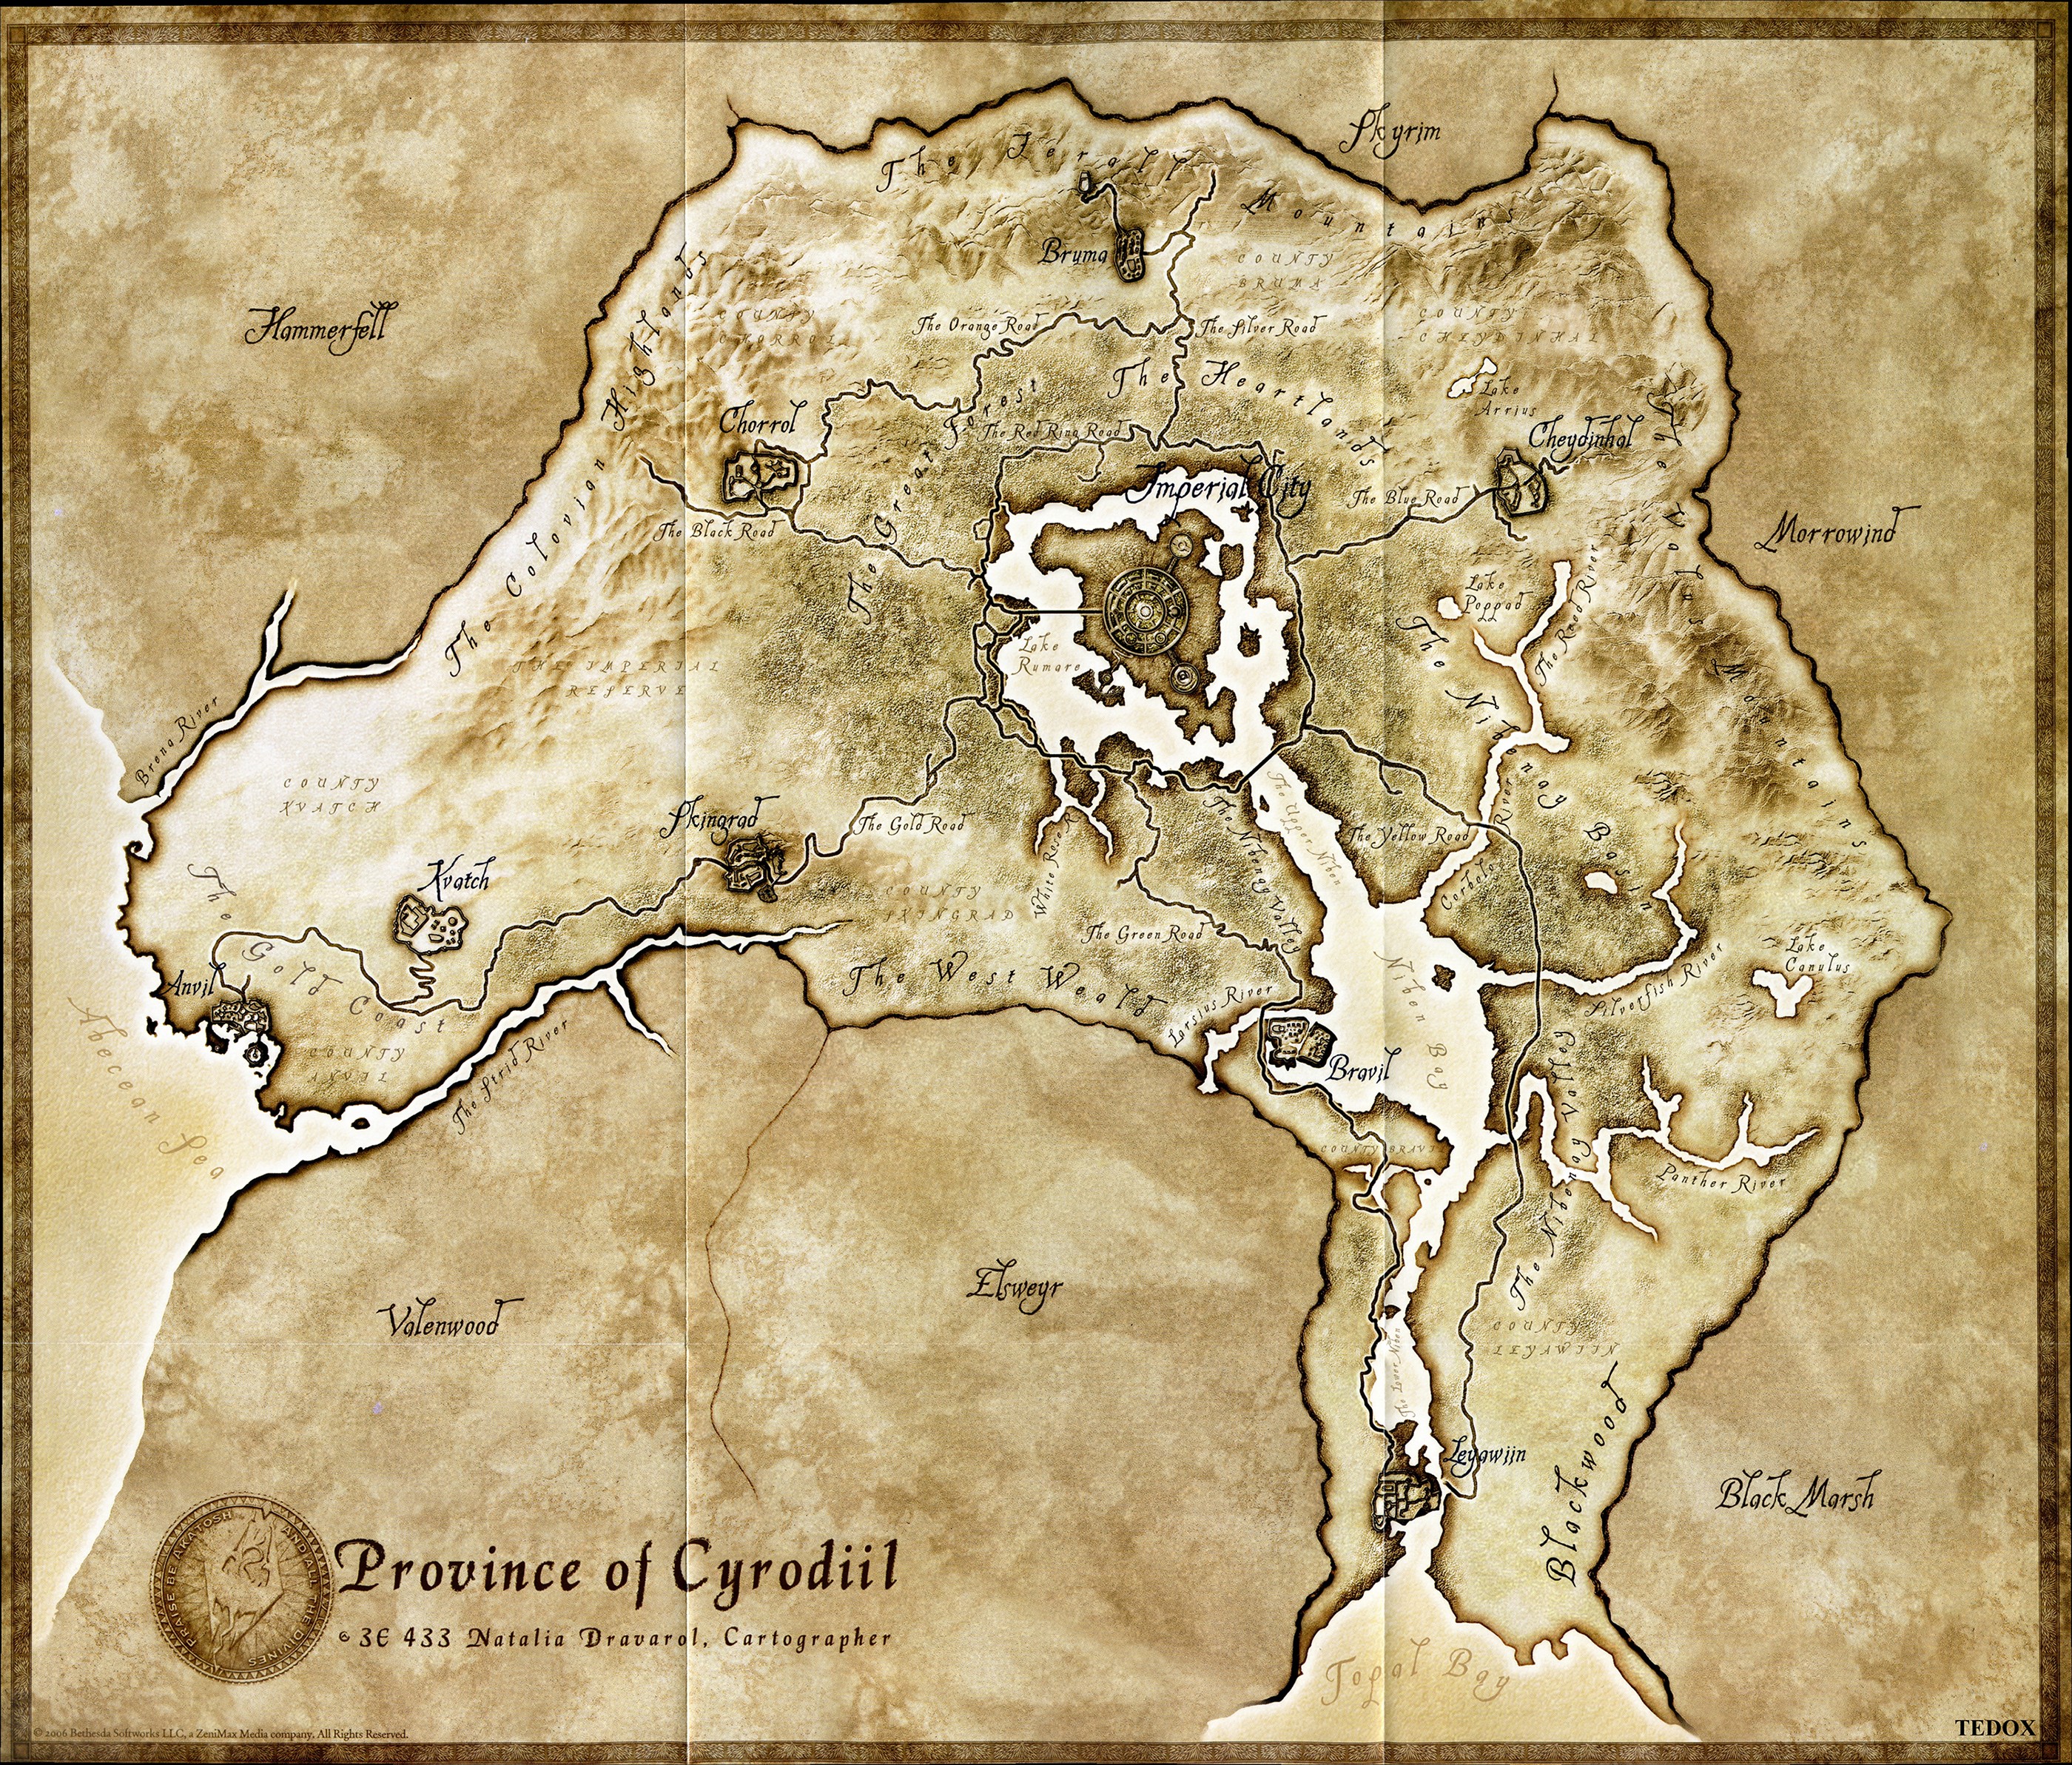 video Games, The Elder Scrolls IV: Oblivion, The Elder Scrolls Wallpaper